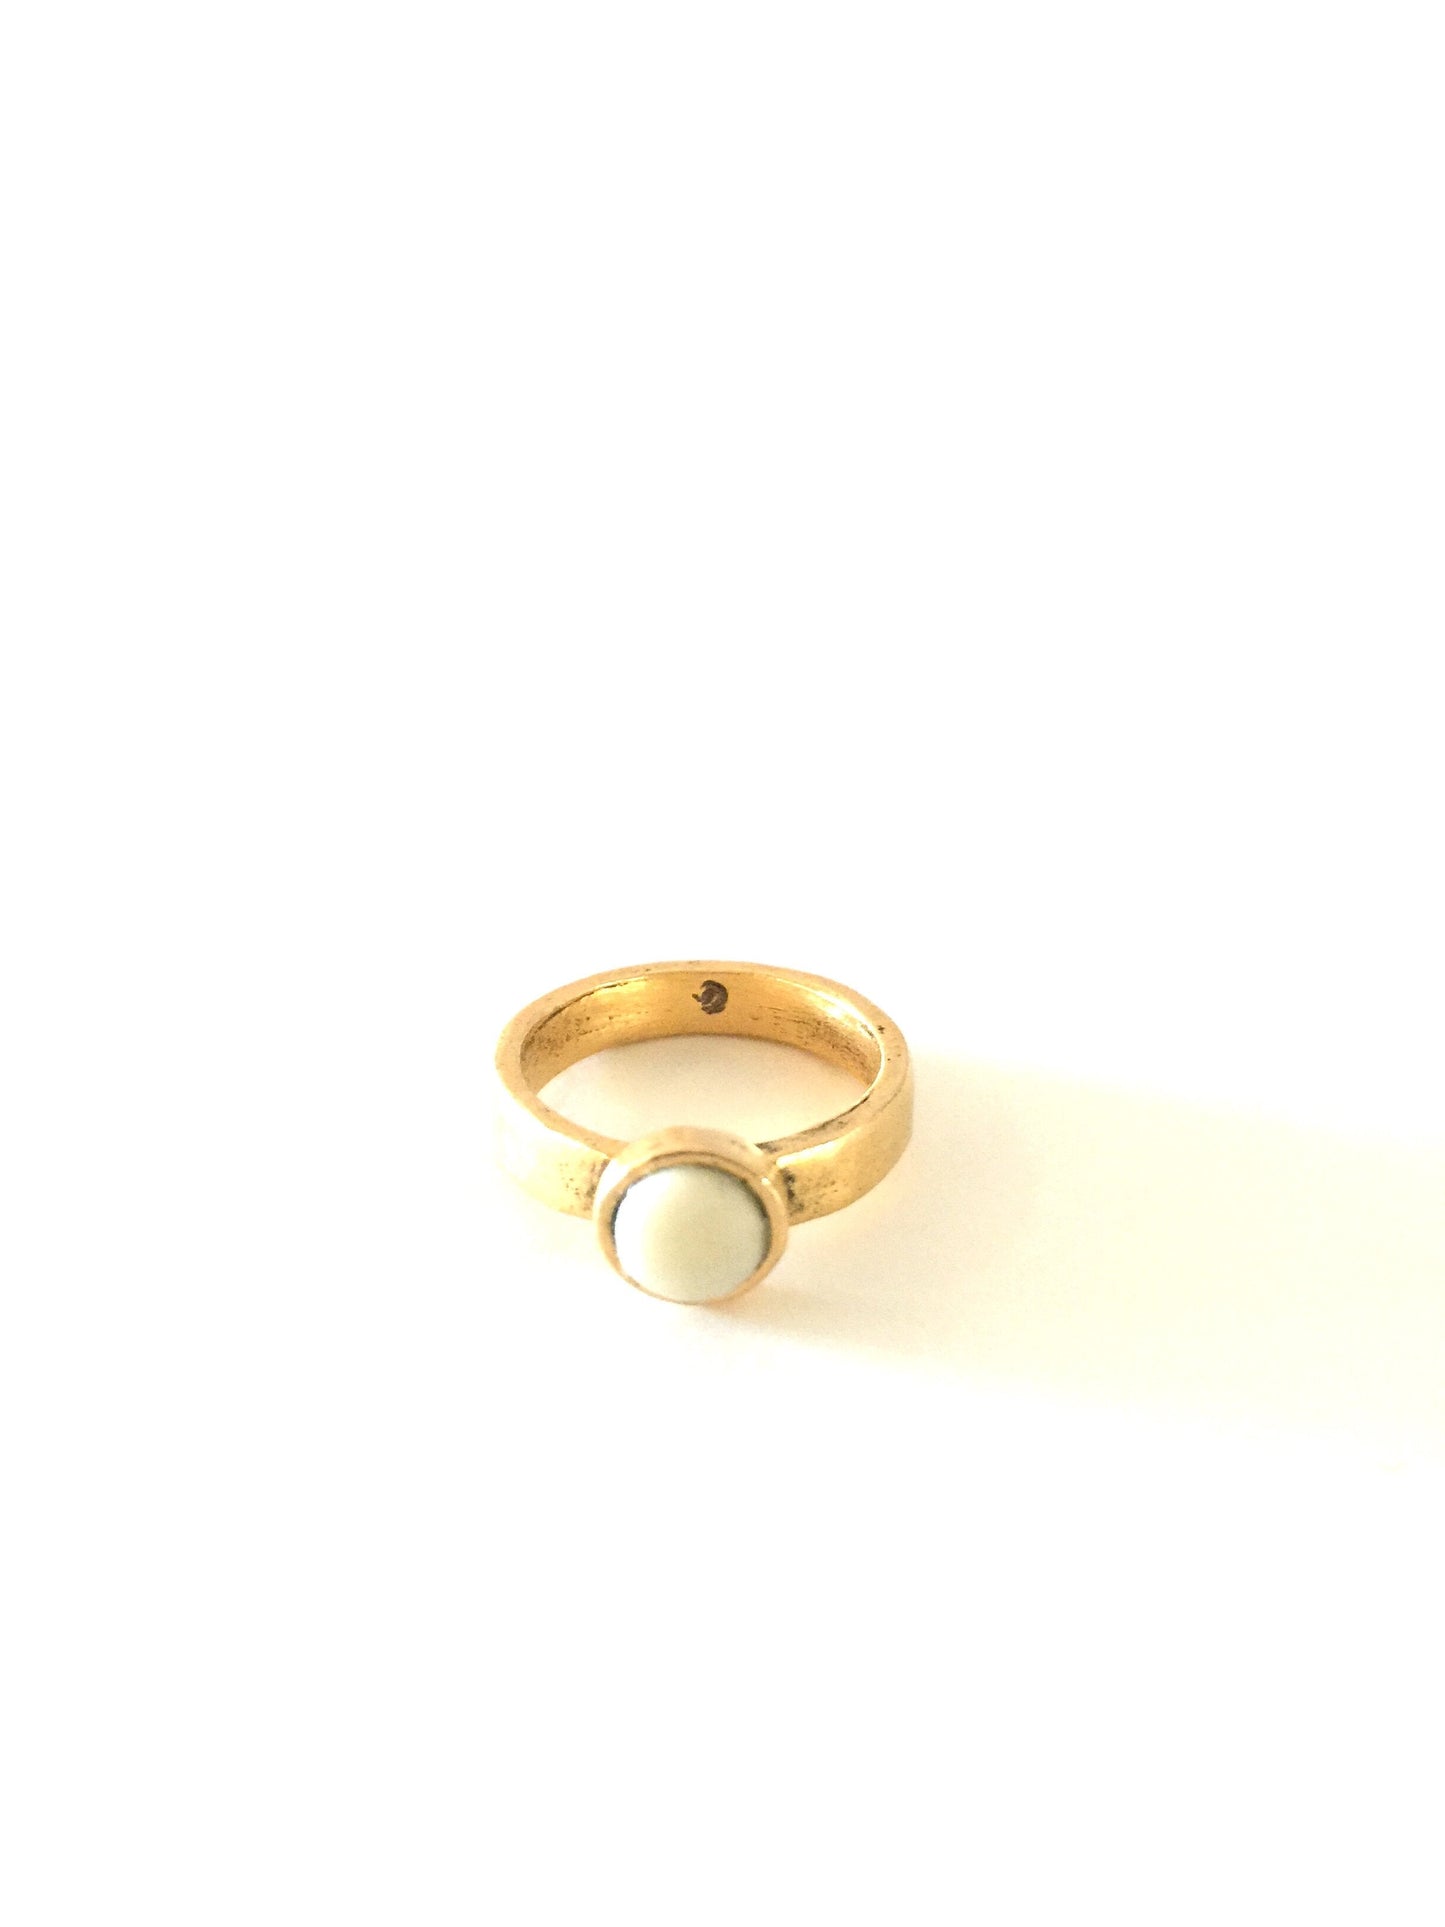 Mend Ring - Gold - Bone